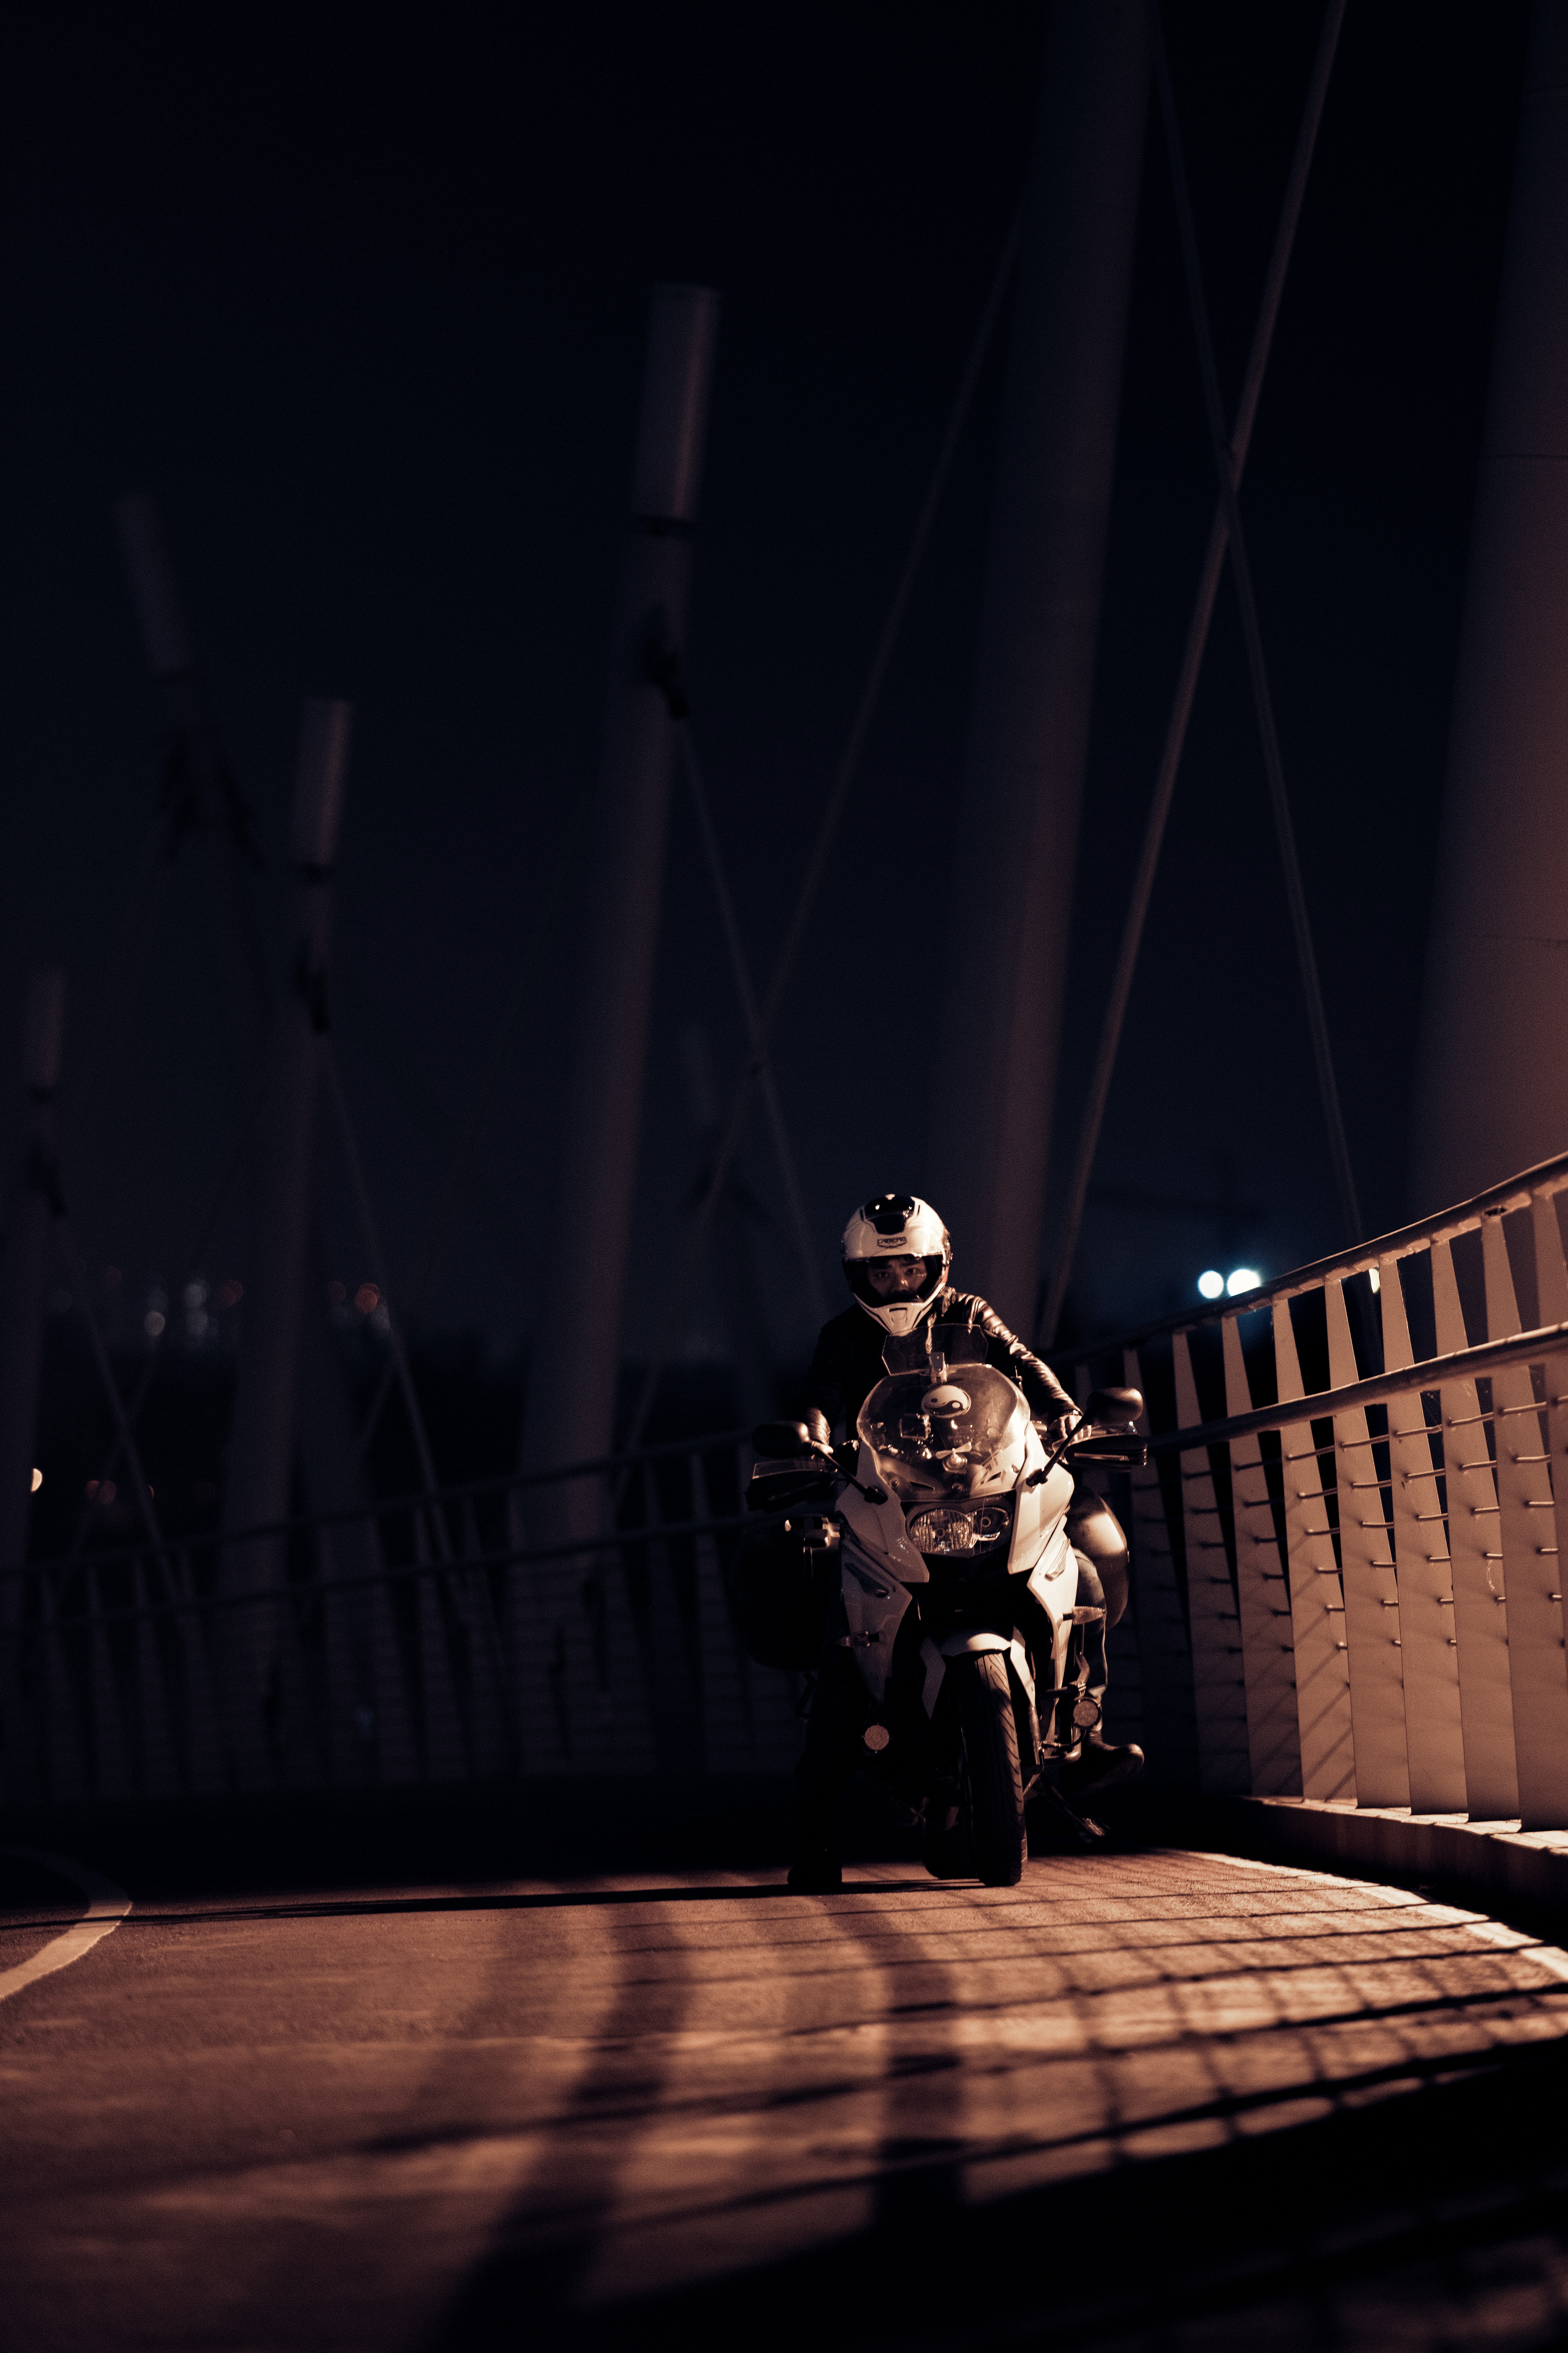 night, motorcycles, motorcyclist, helmet, motorcycle